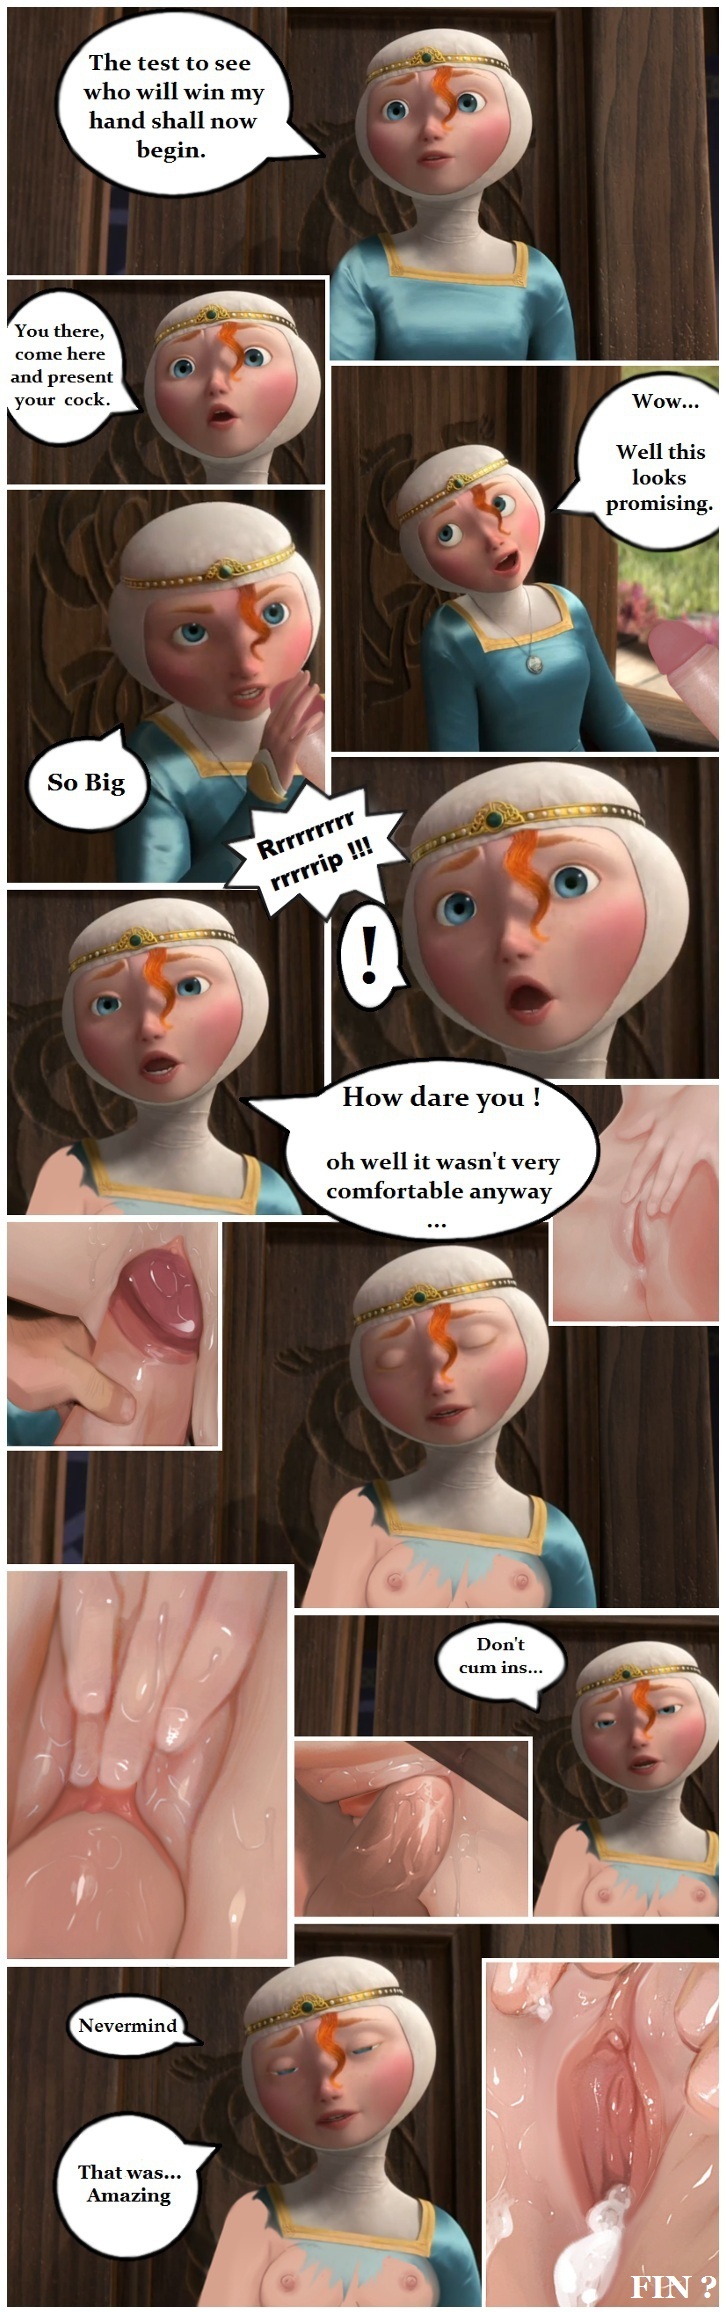 Brave Movie Porn - cartoons | Page 86 | XNXX Adult Forum